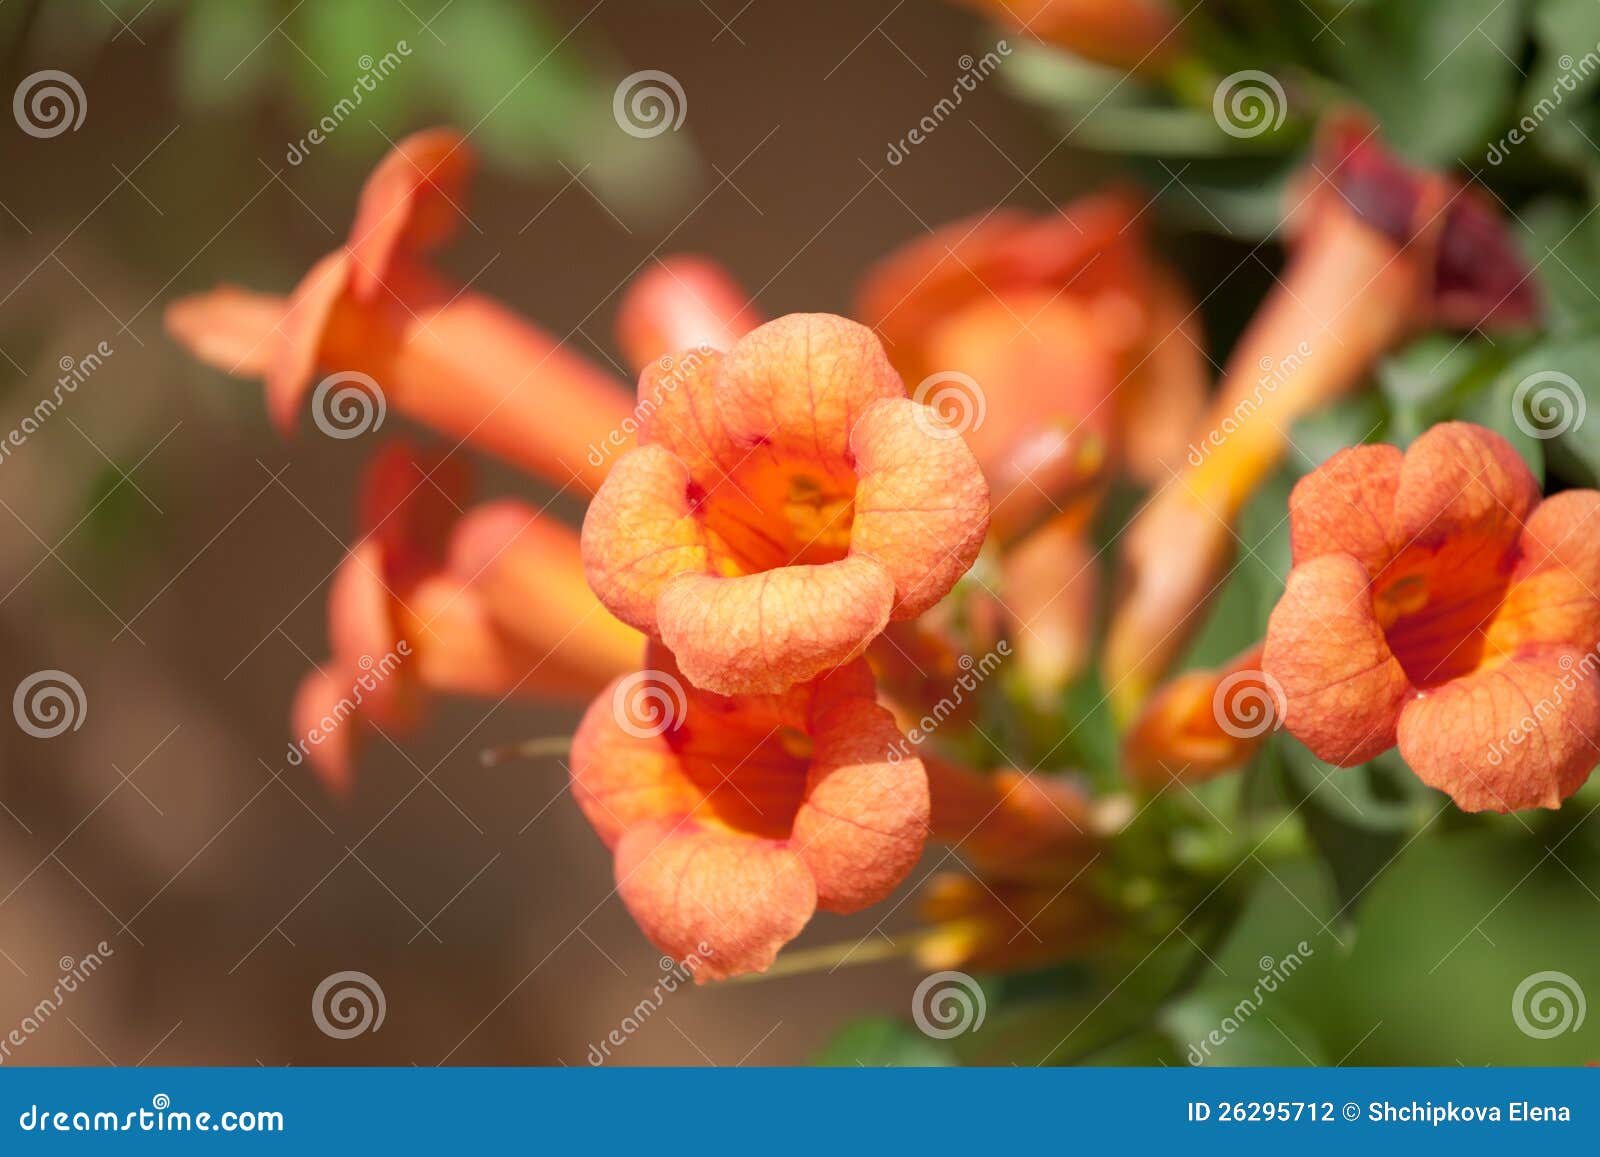 trumpet vine flowers